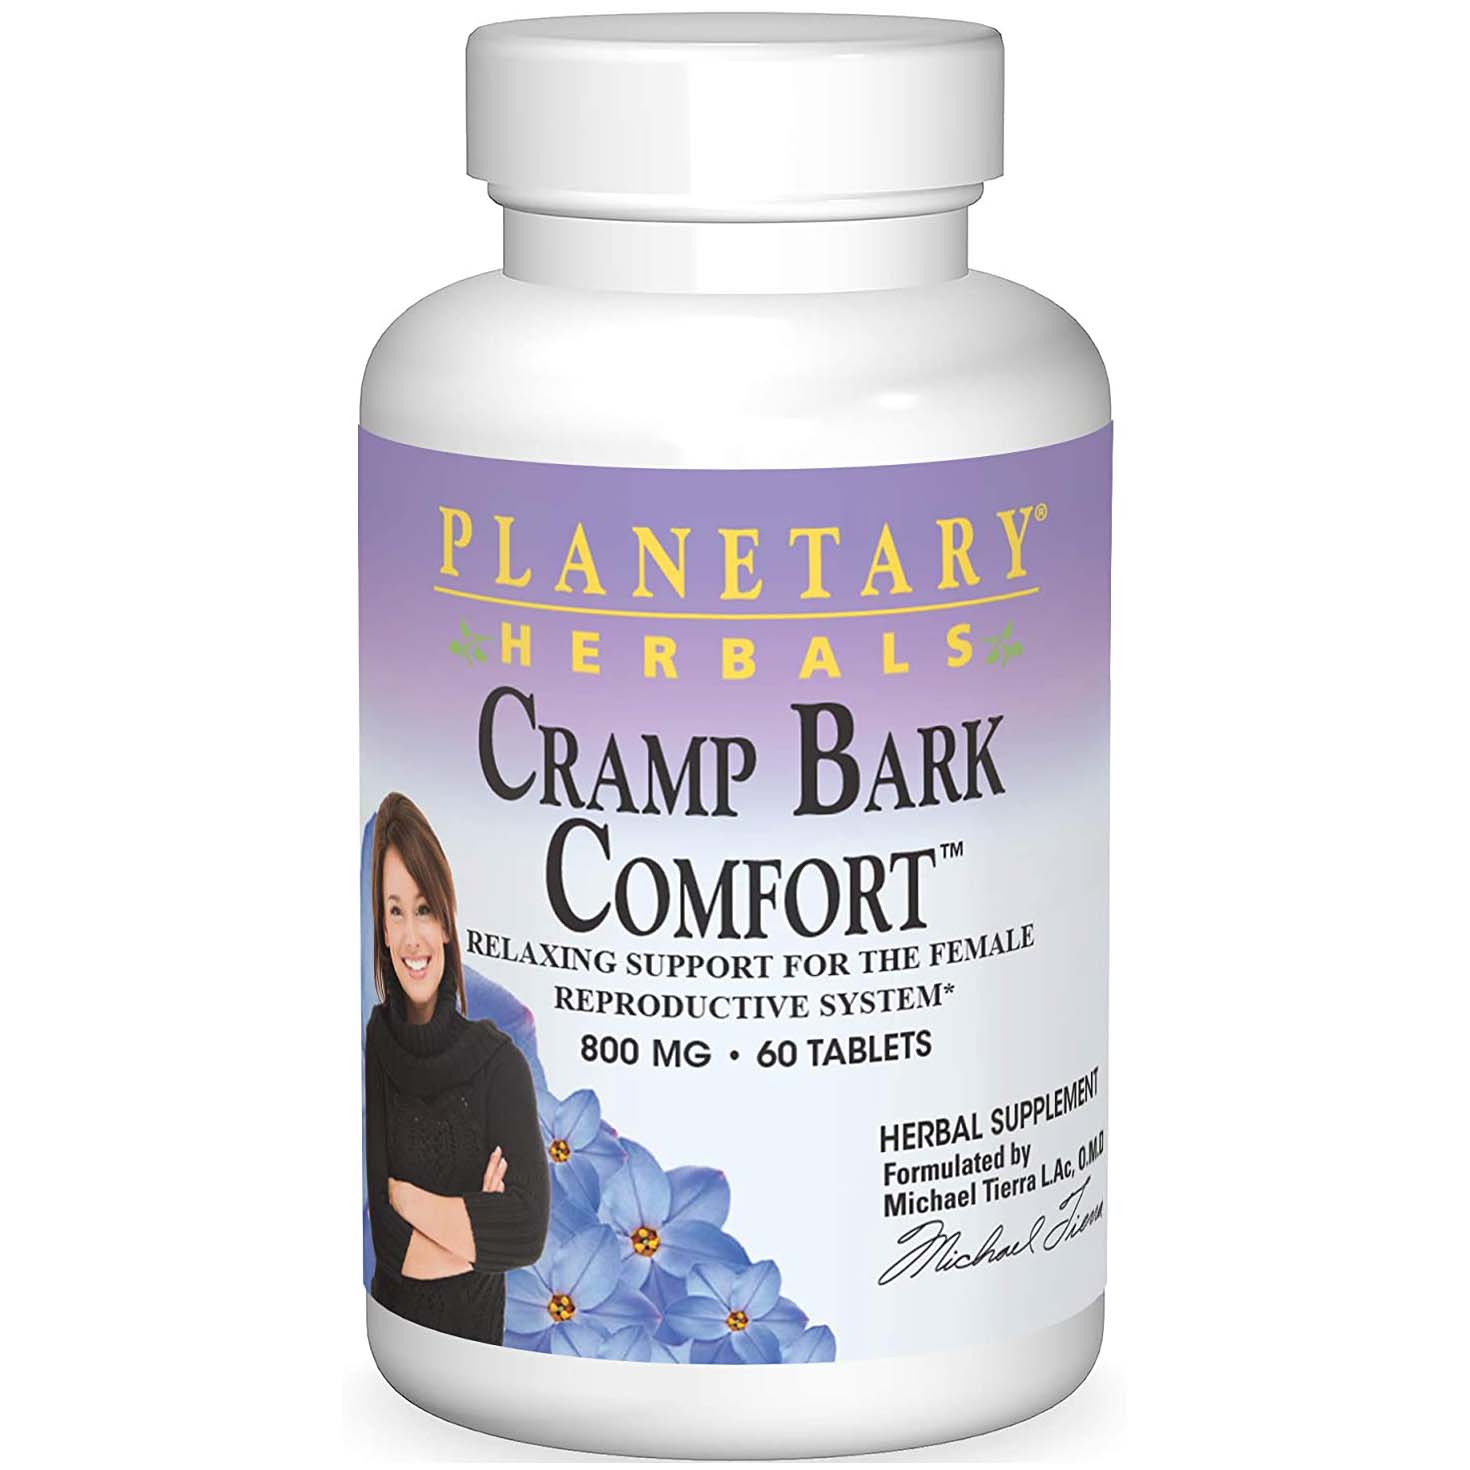 Planetary Herbals Cramp Bark Comfort, 800 mg, 60 Tablets